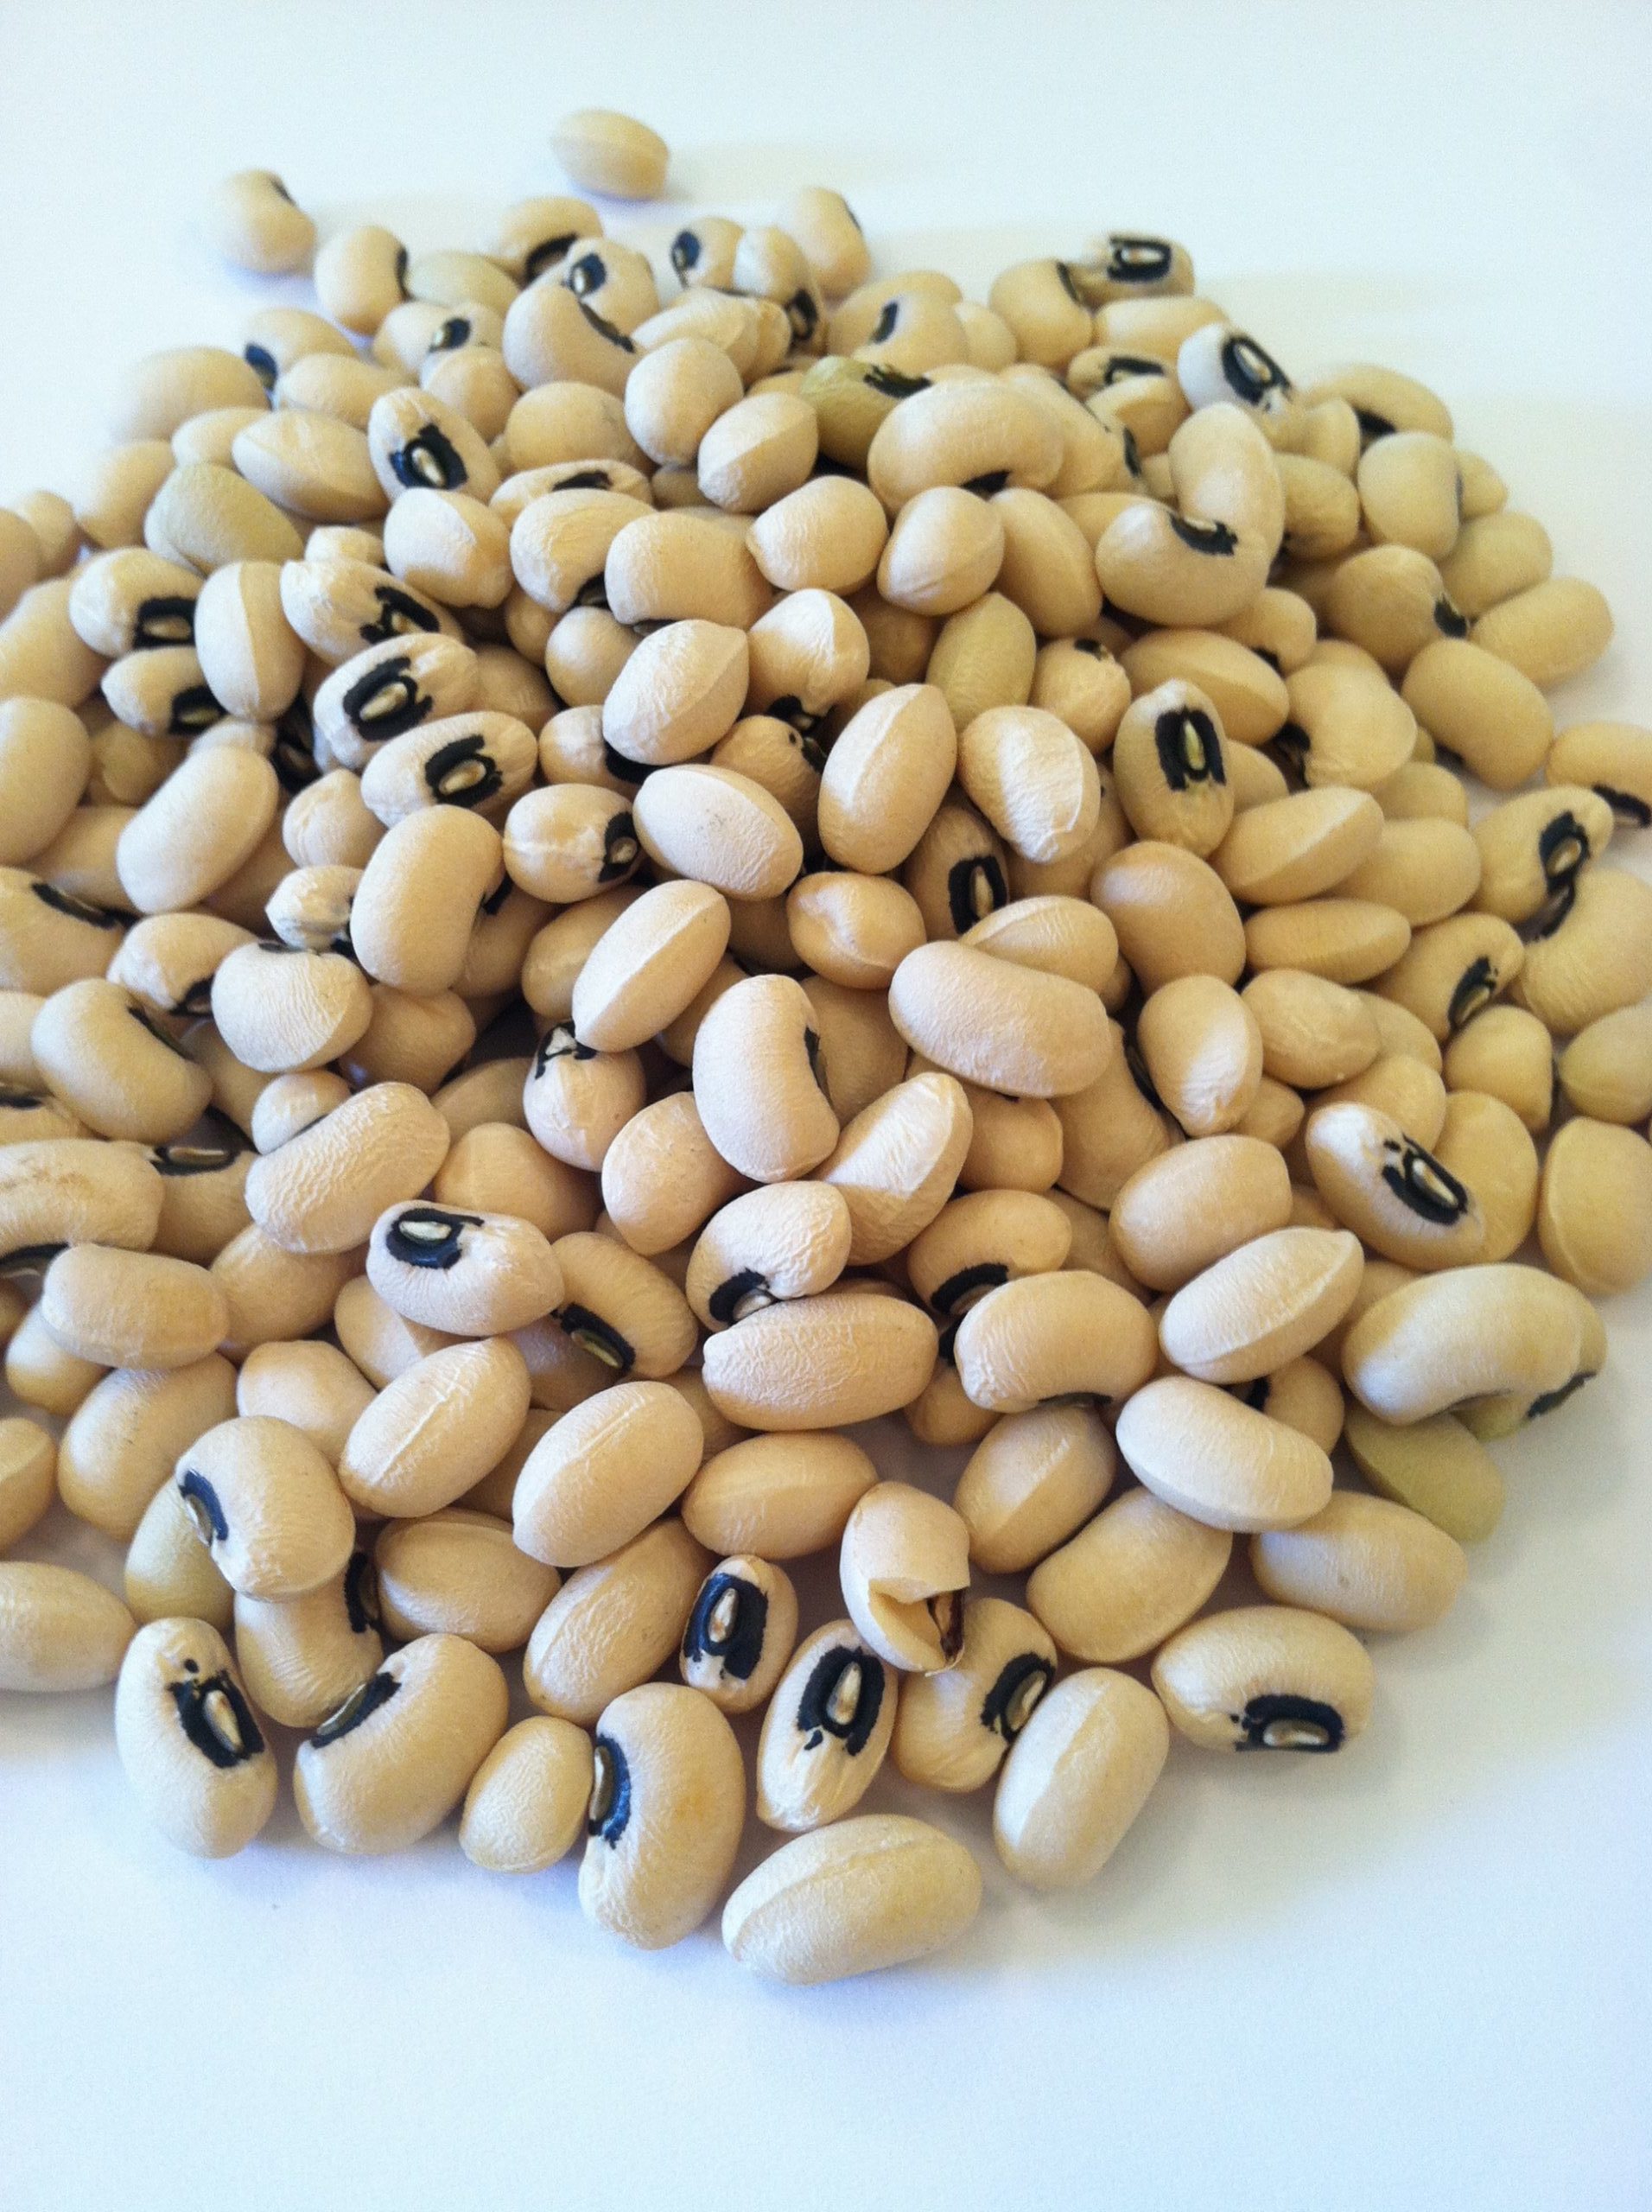 500 BLACKEYE PEA Black Eye Eyed Southern Cow Peas Seeds Heirloom Fresh Bean